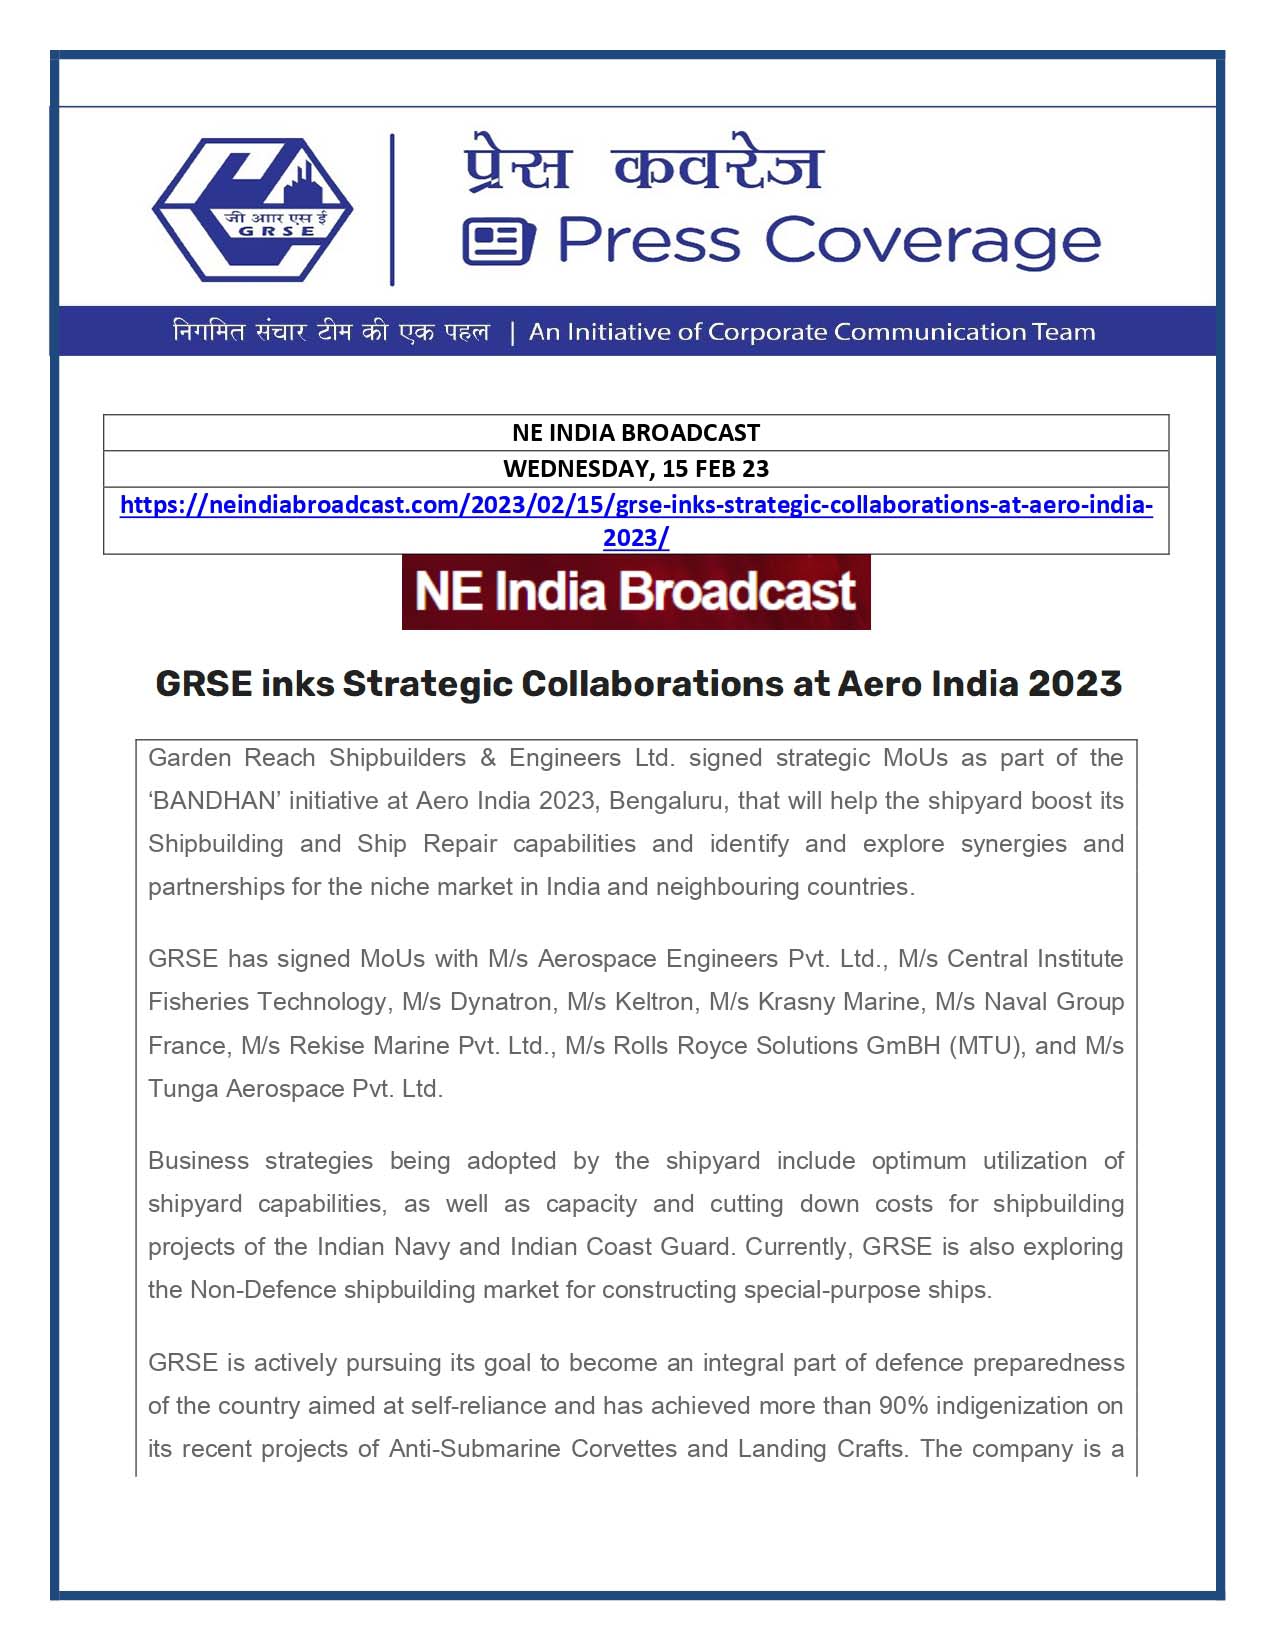 NE India Broadcast 15 Feb 23